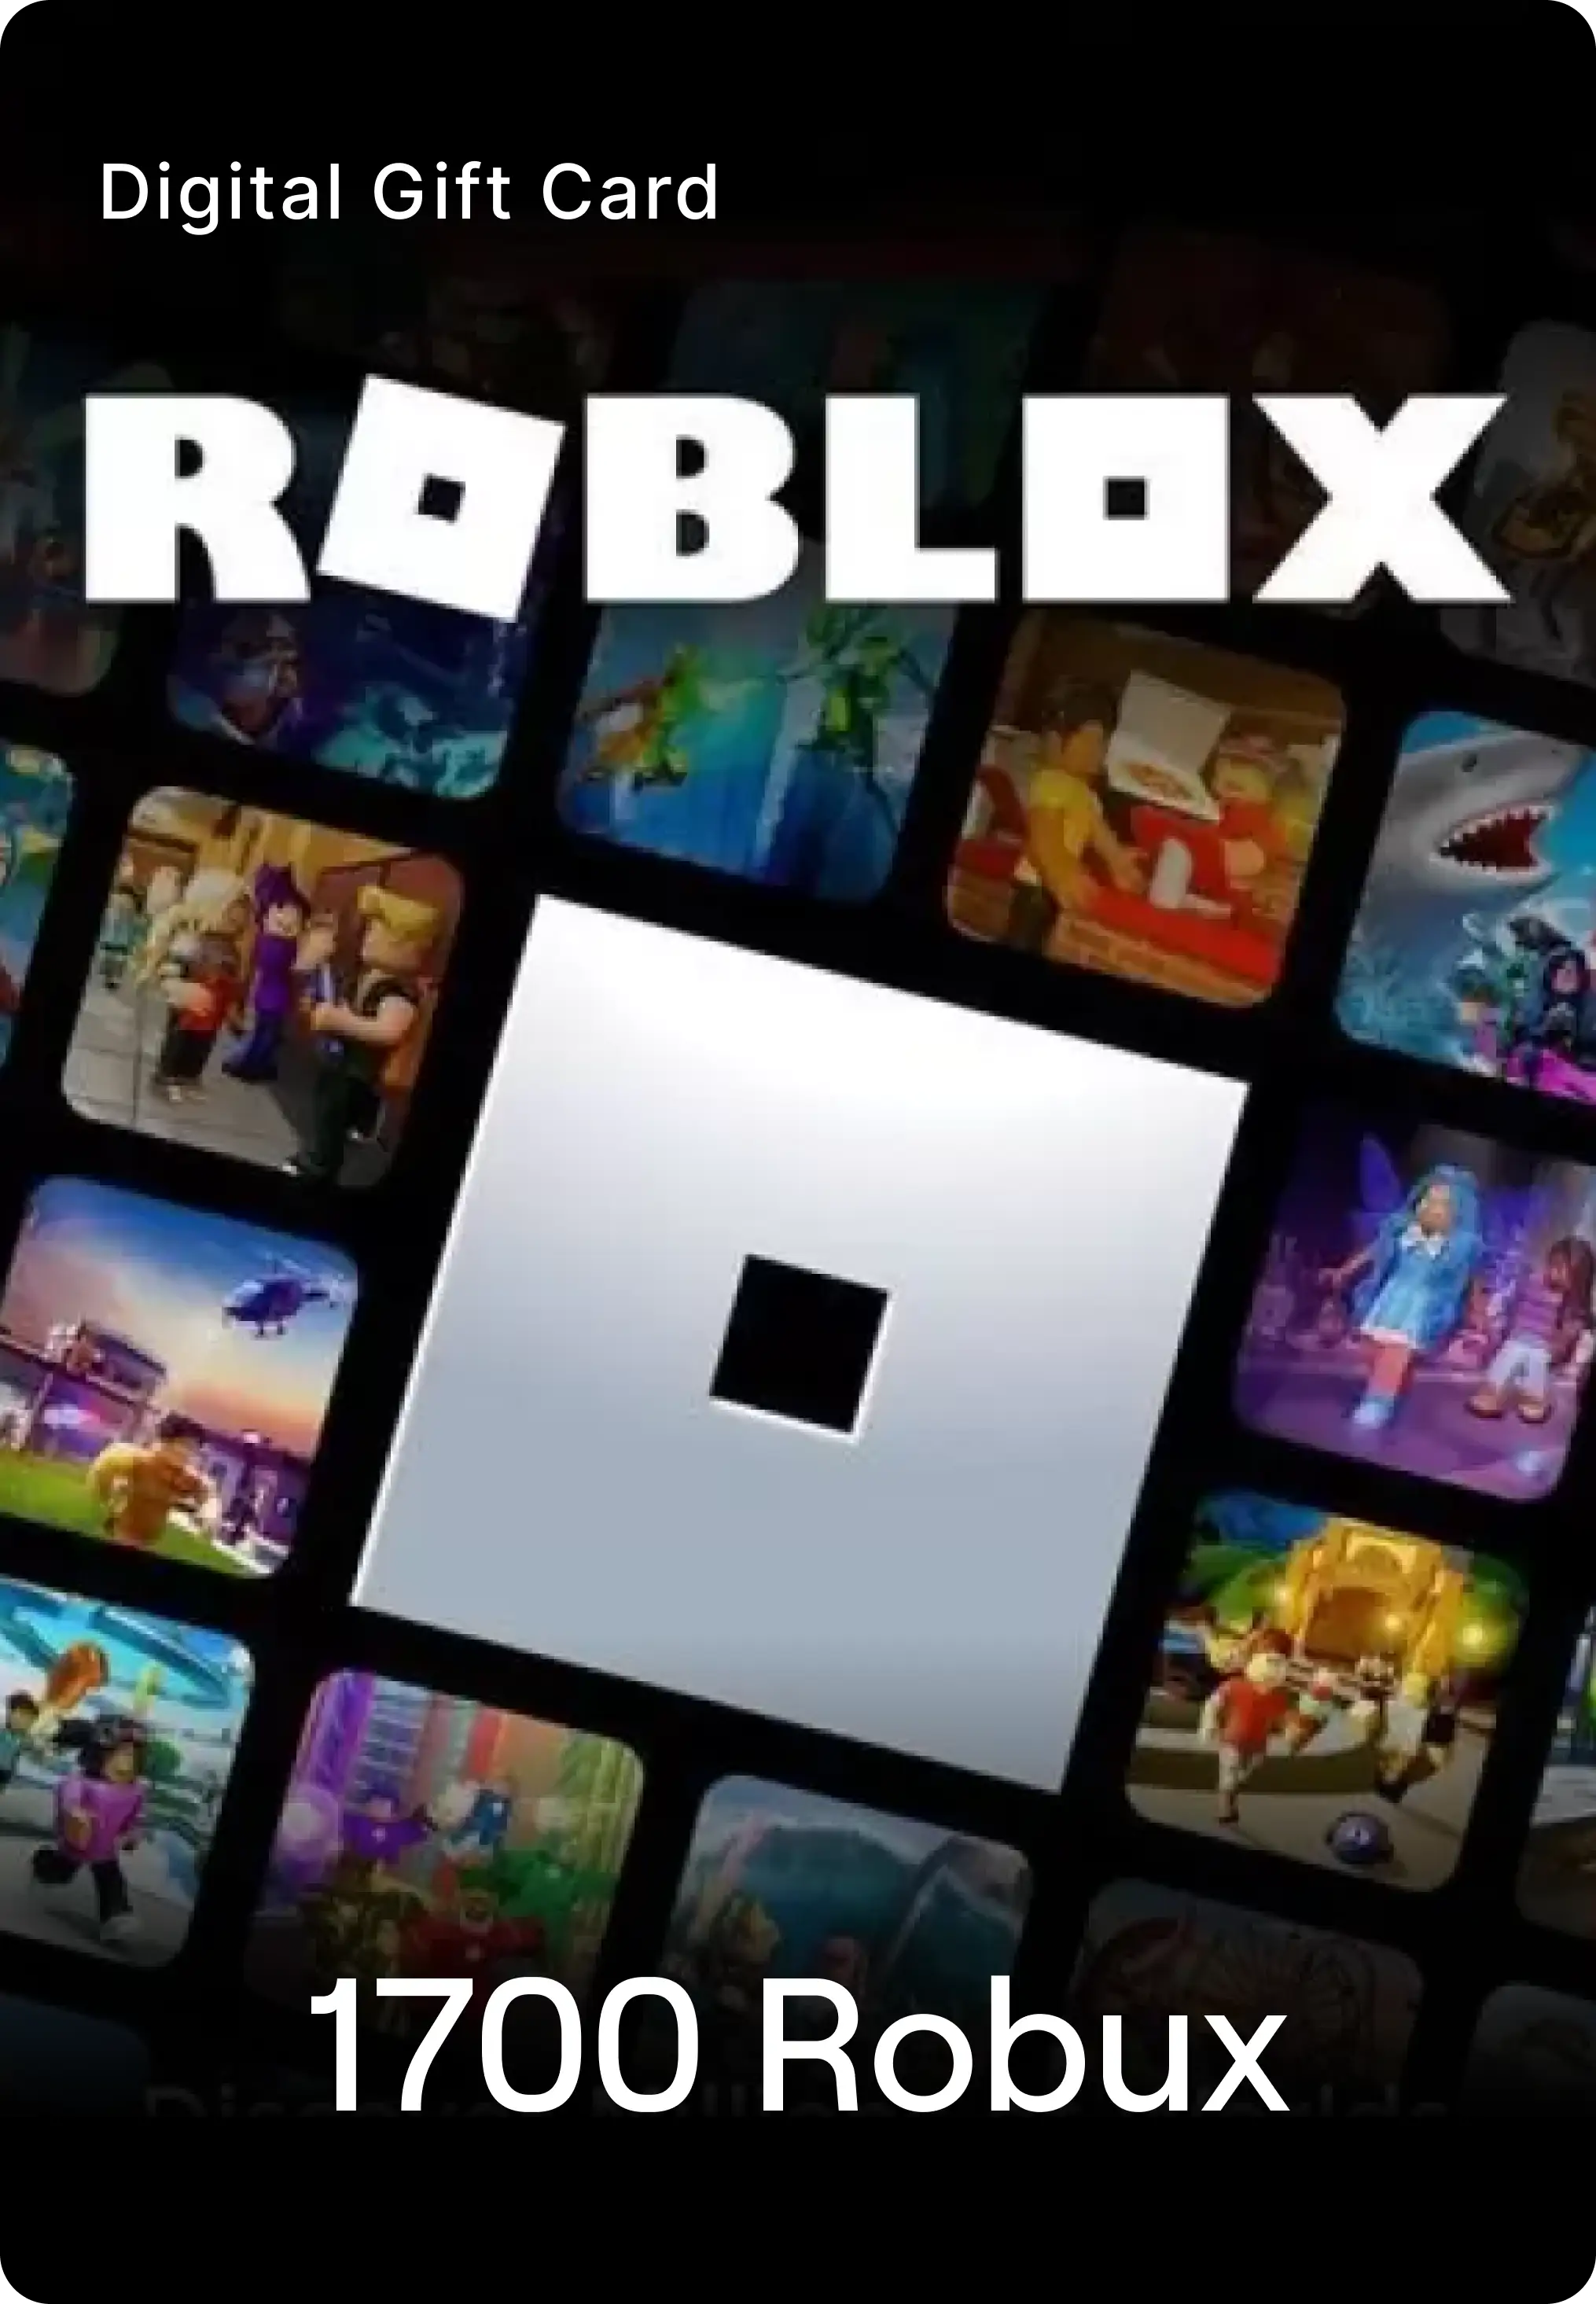 Roblox - 1700 Robux - Digital Code